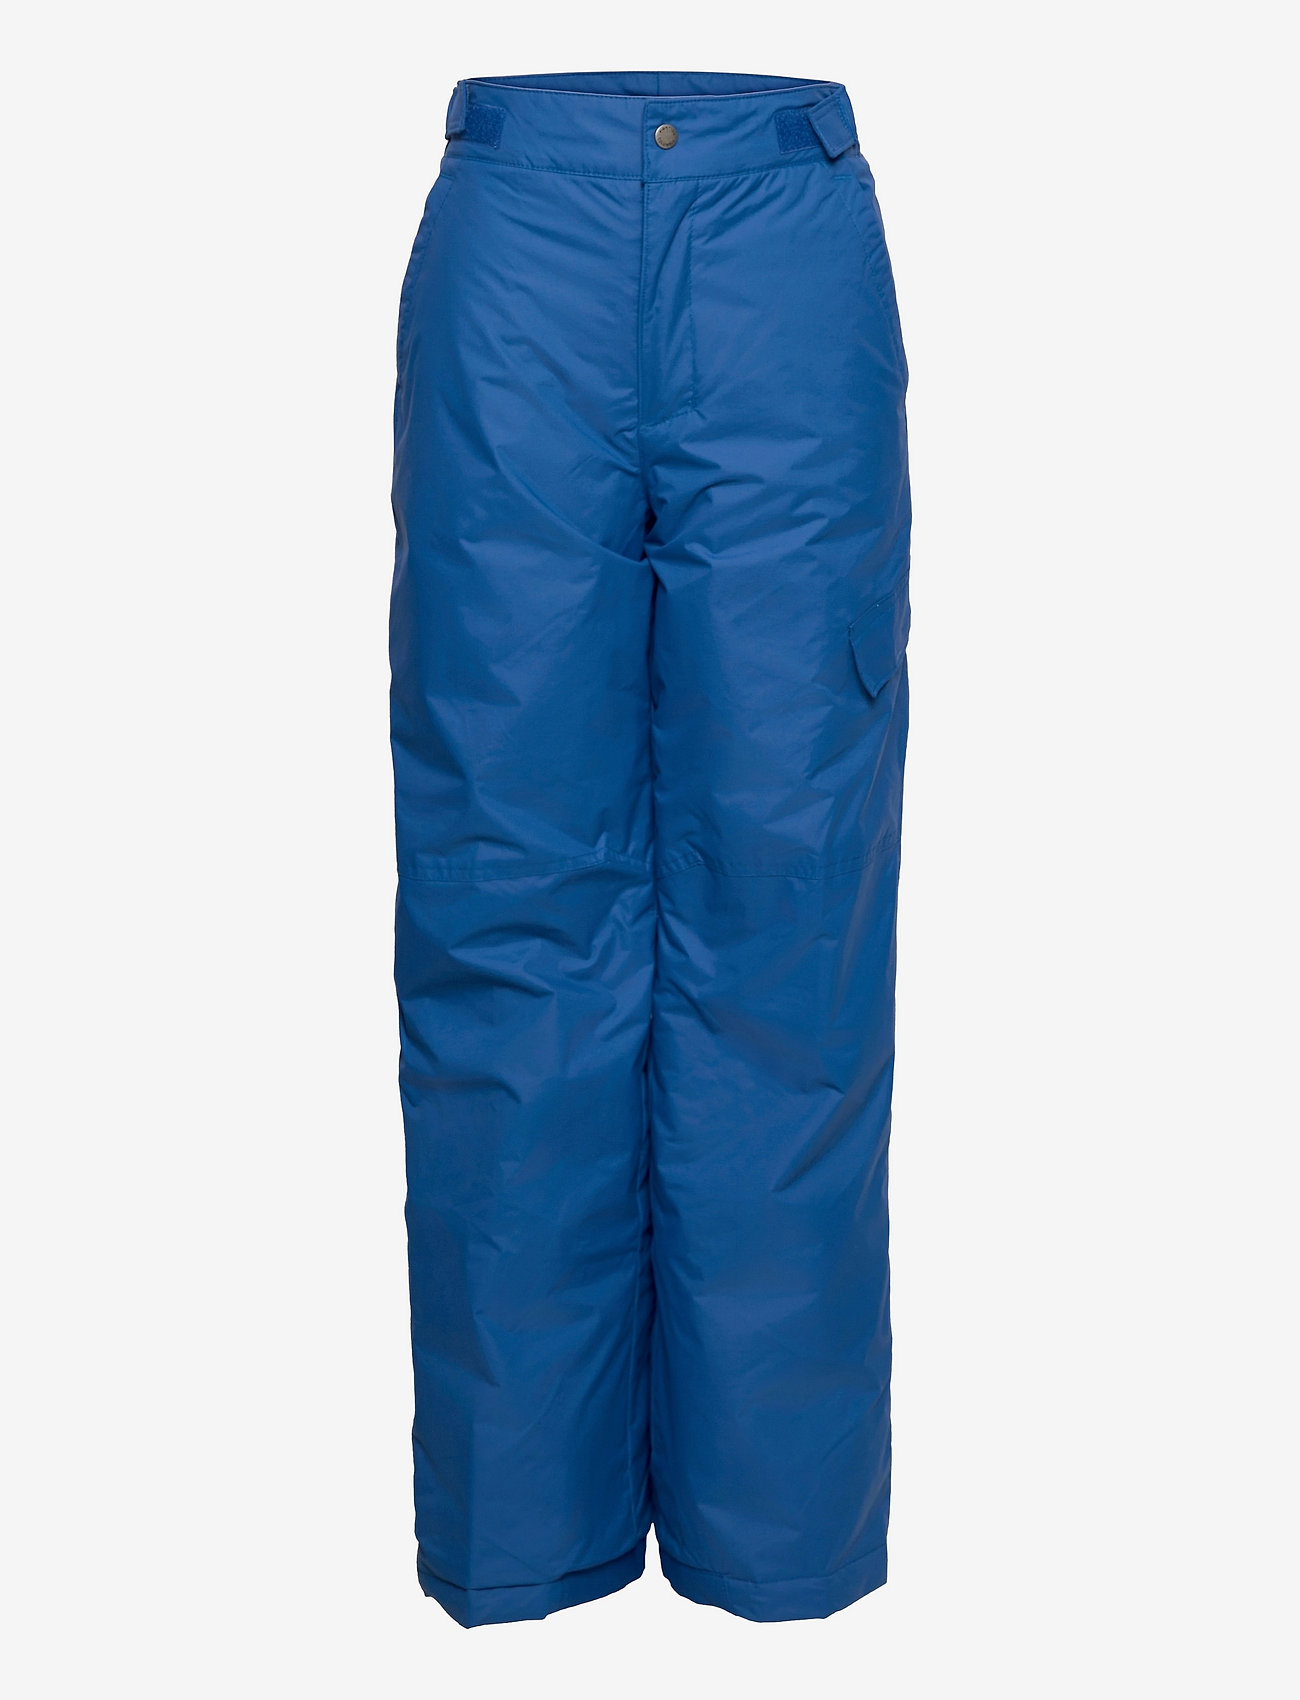 Columbia Sportswear - Ice Slope II Pant - skibroeken - bright indigo - 0